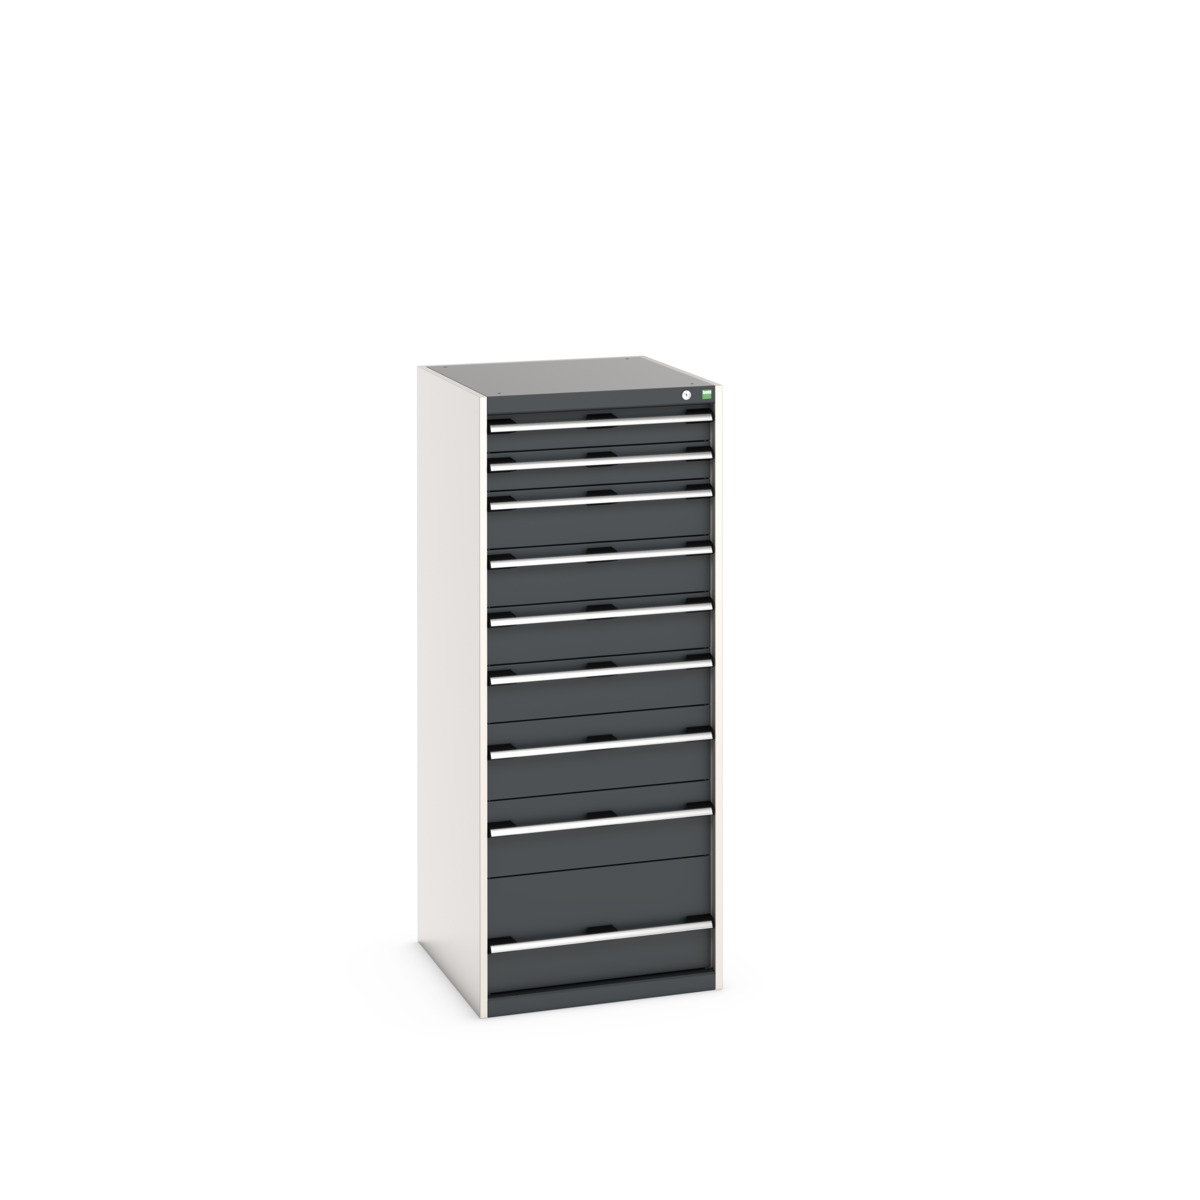 40027045. - cubio drawer cabinet